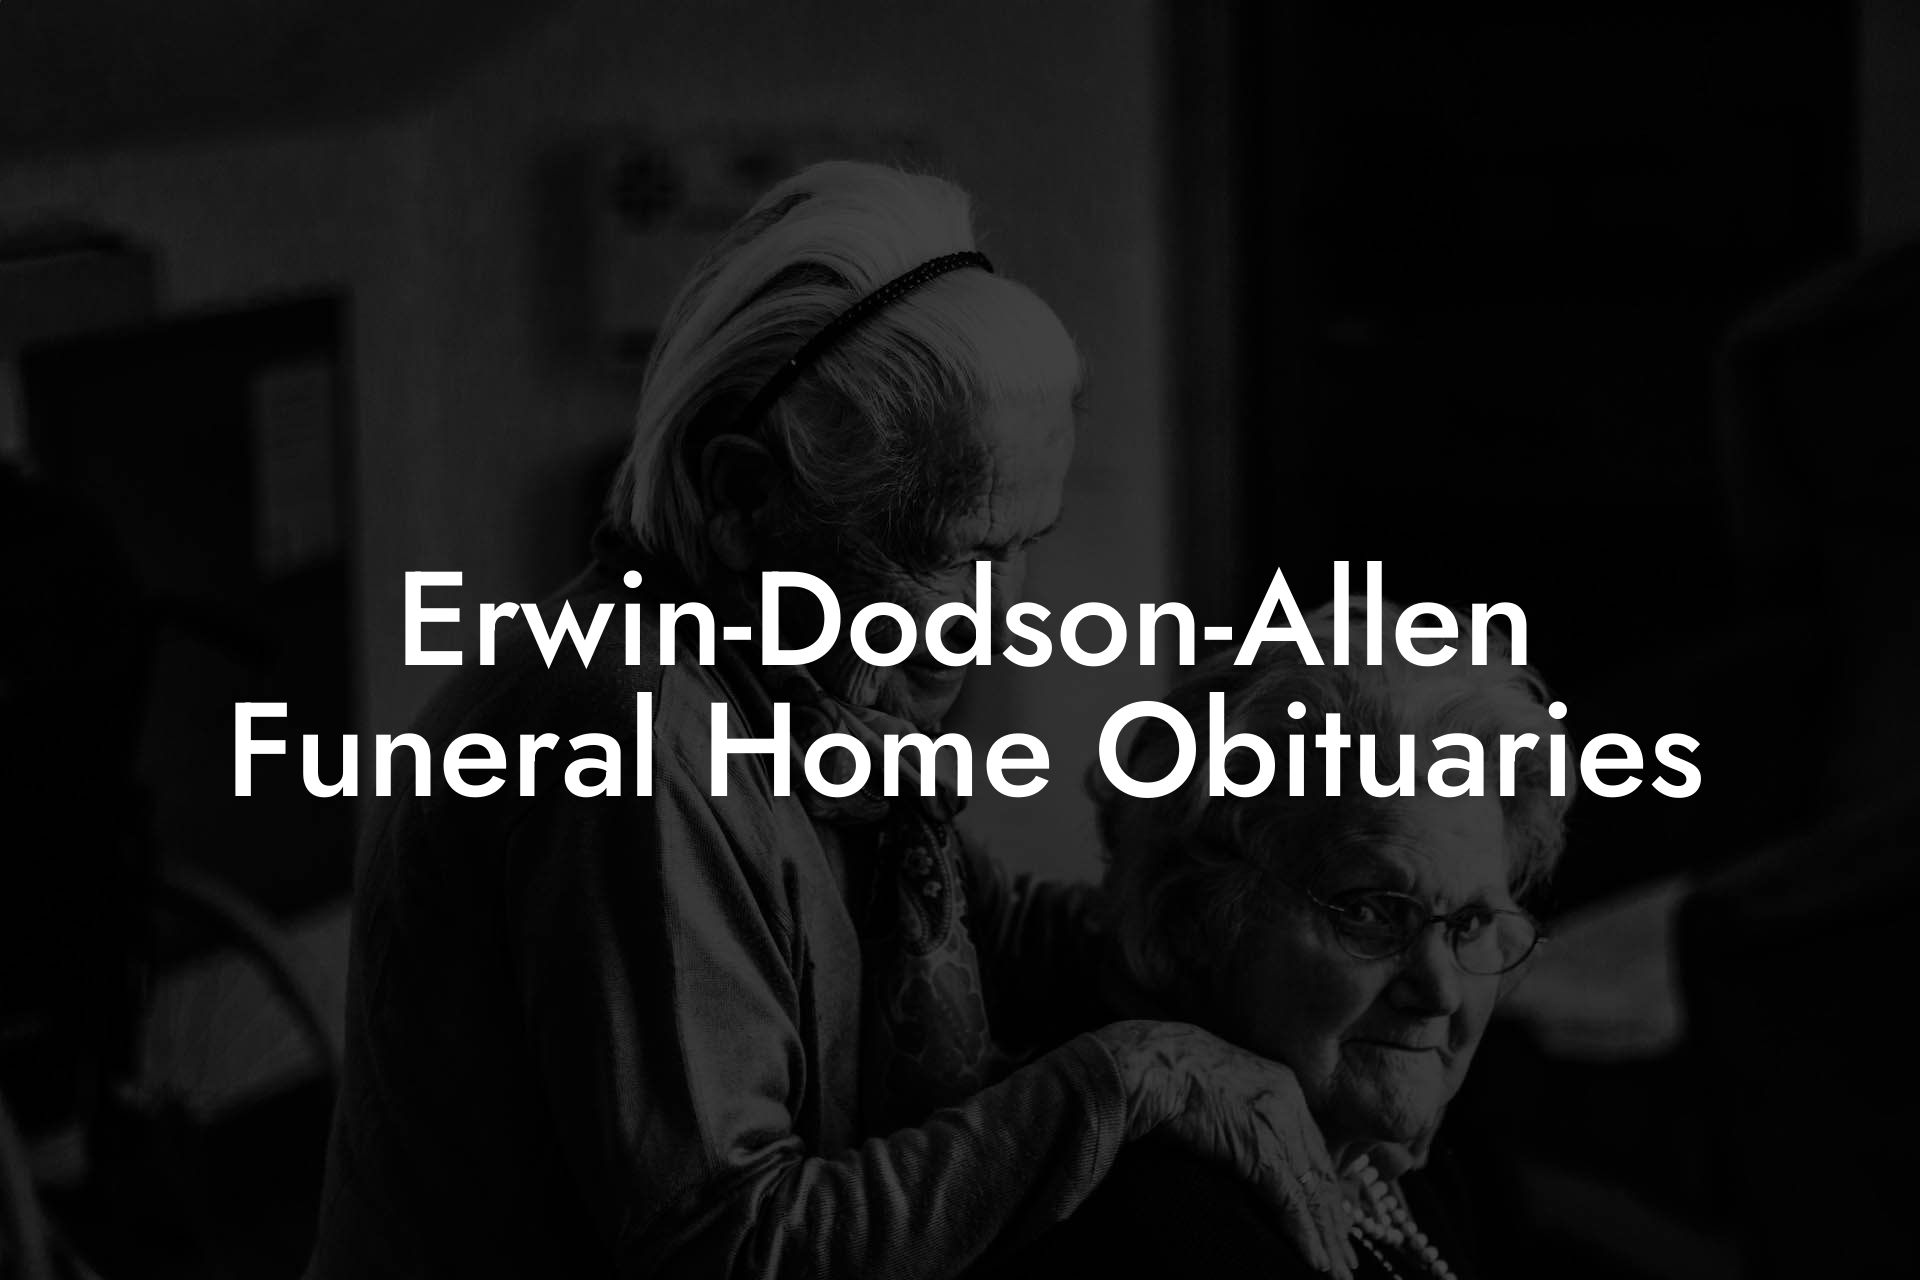 Erwin-Dodson-Allen Funeral Home Obituaries